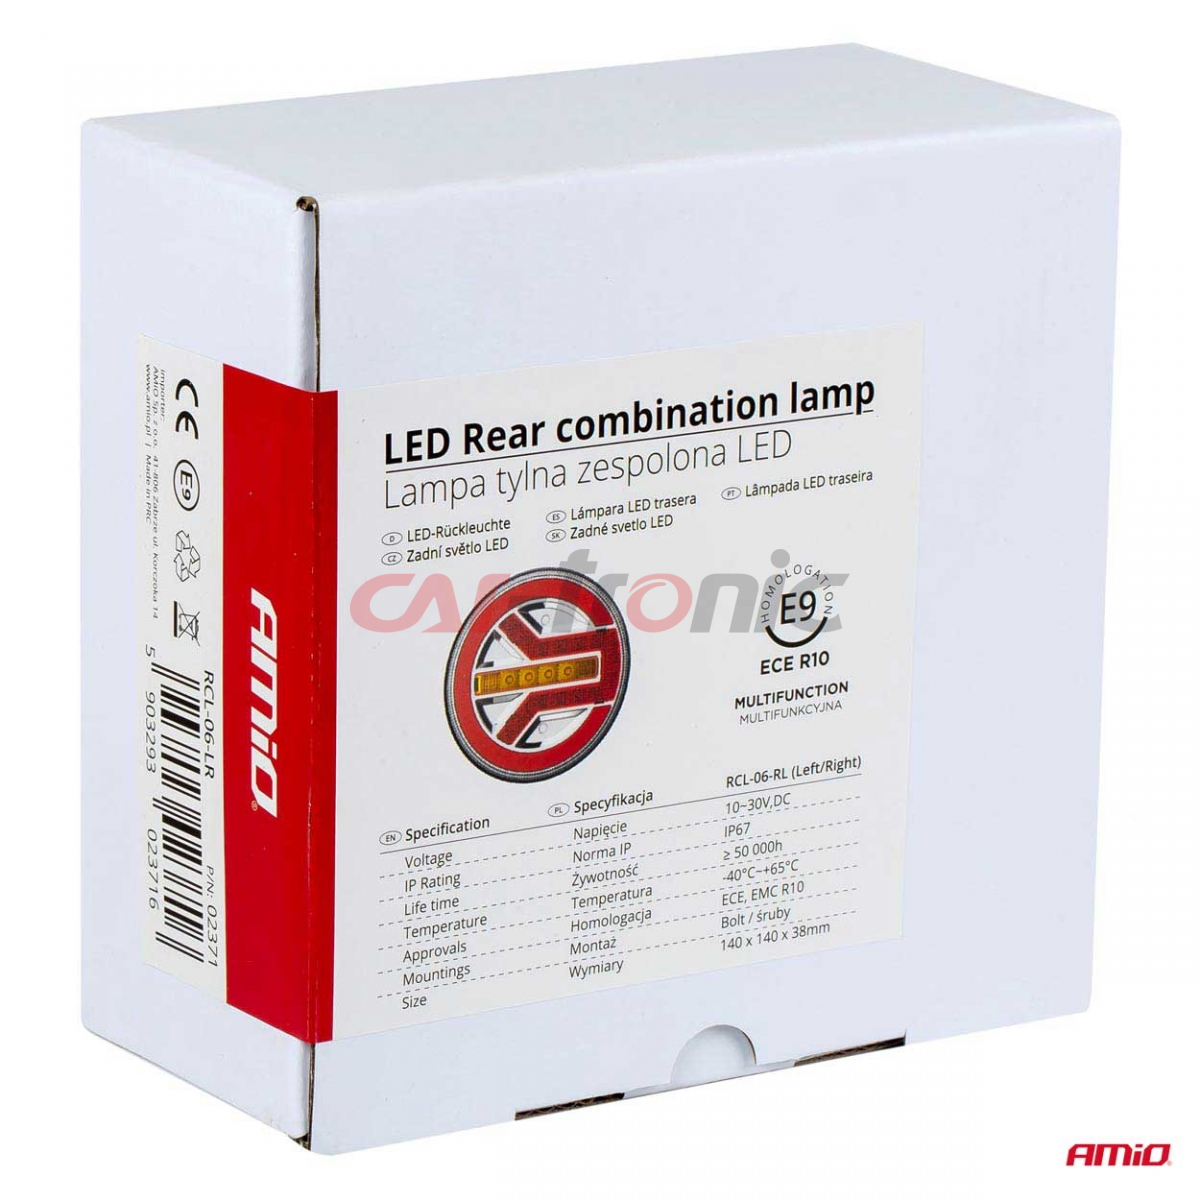 Lampa tylna zespolona LED RCL-06-LR lewa prawa AMIO-02371